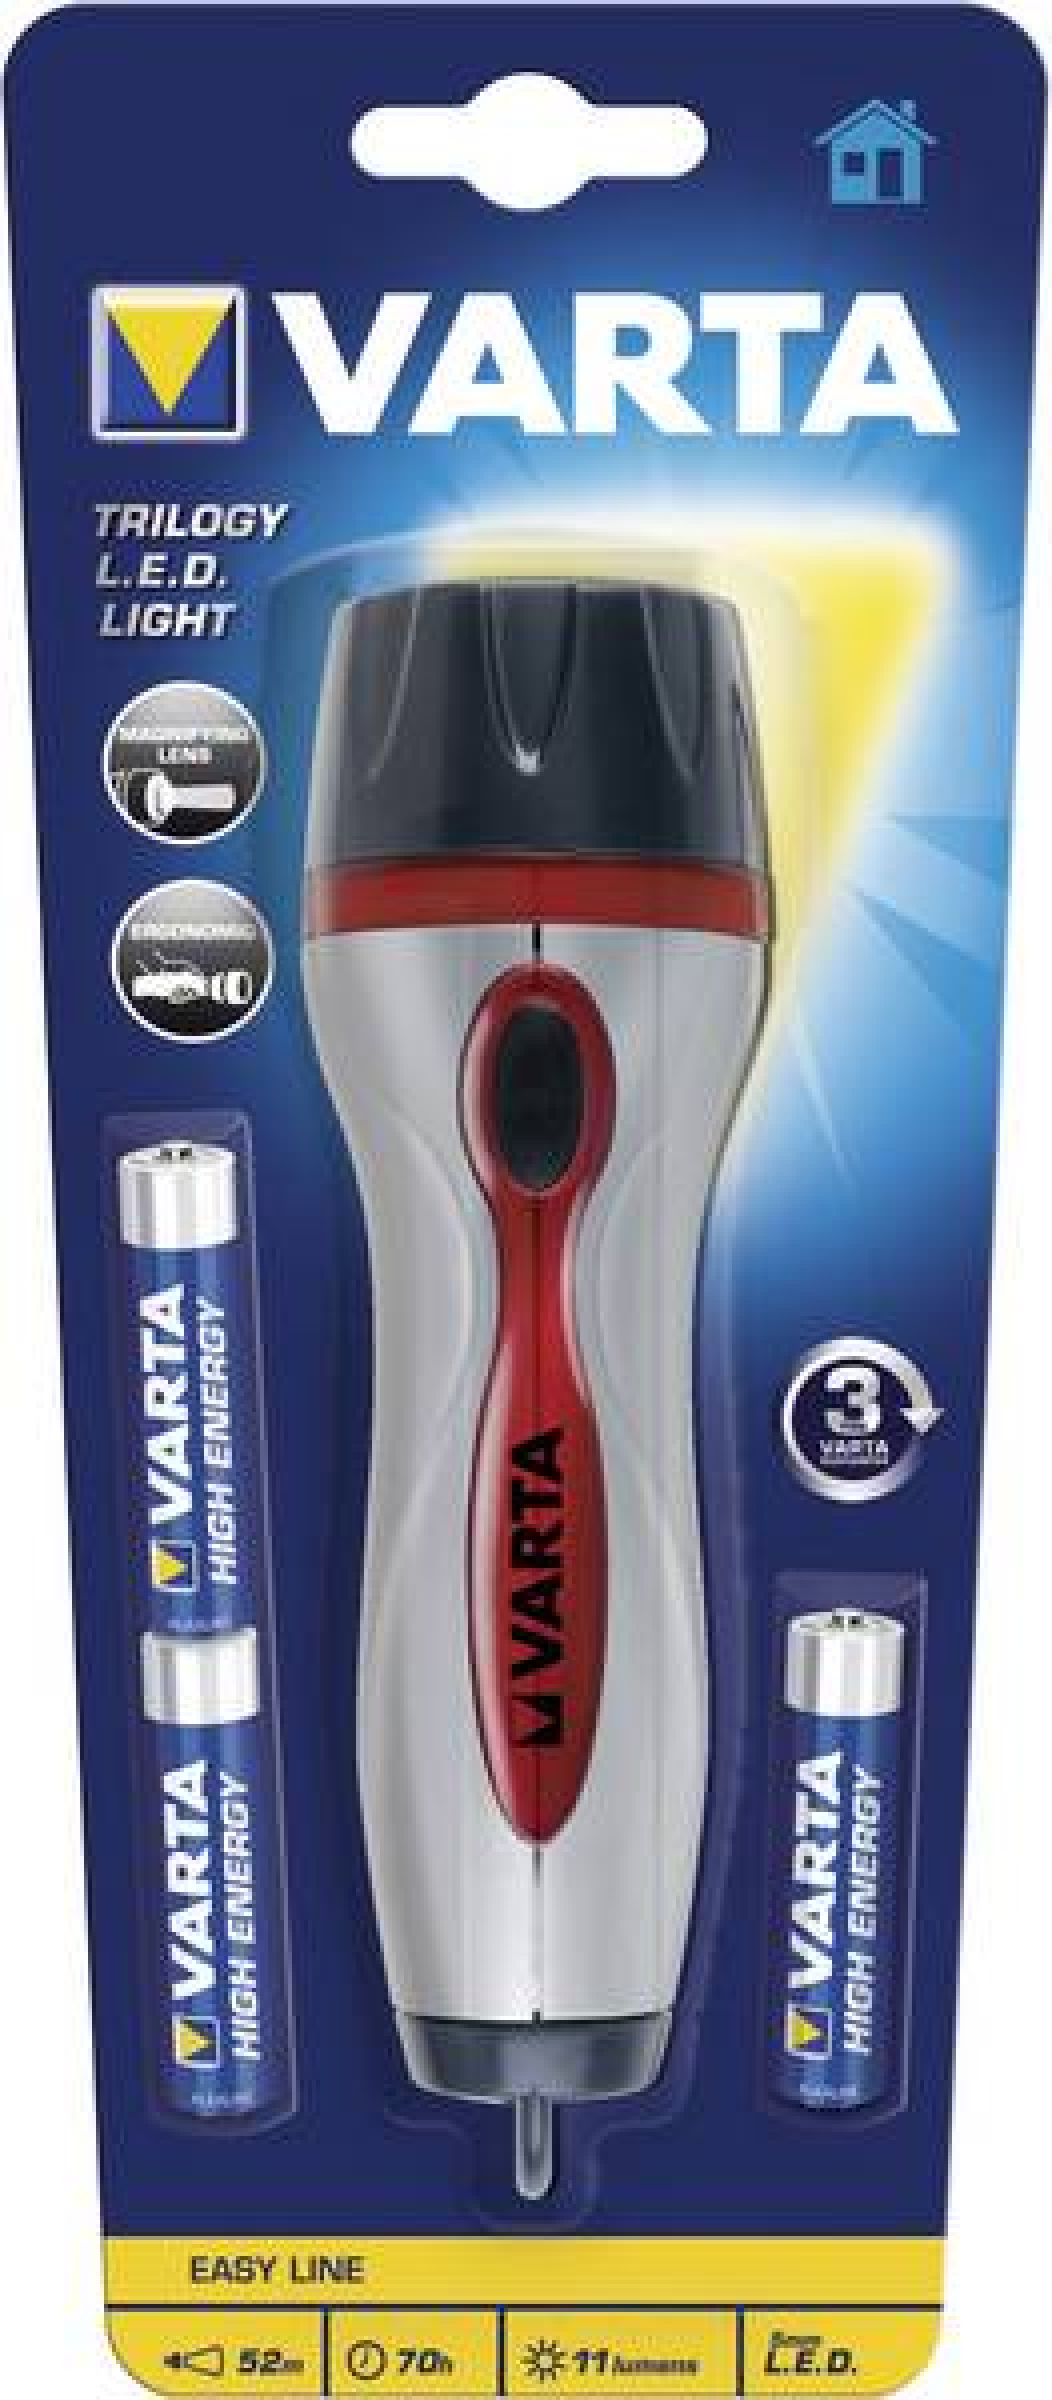 Varta Trilogy LED Light 3AAA incl. Batteries